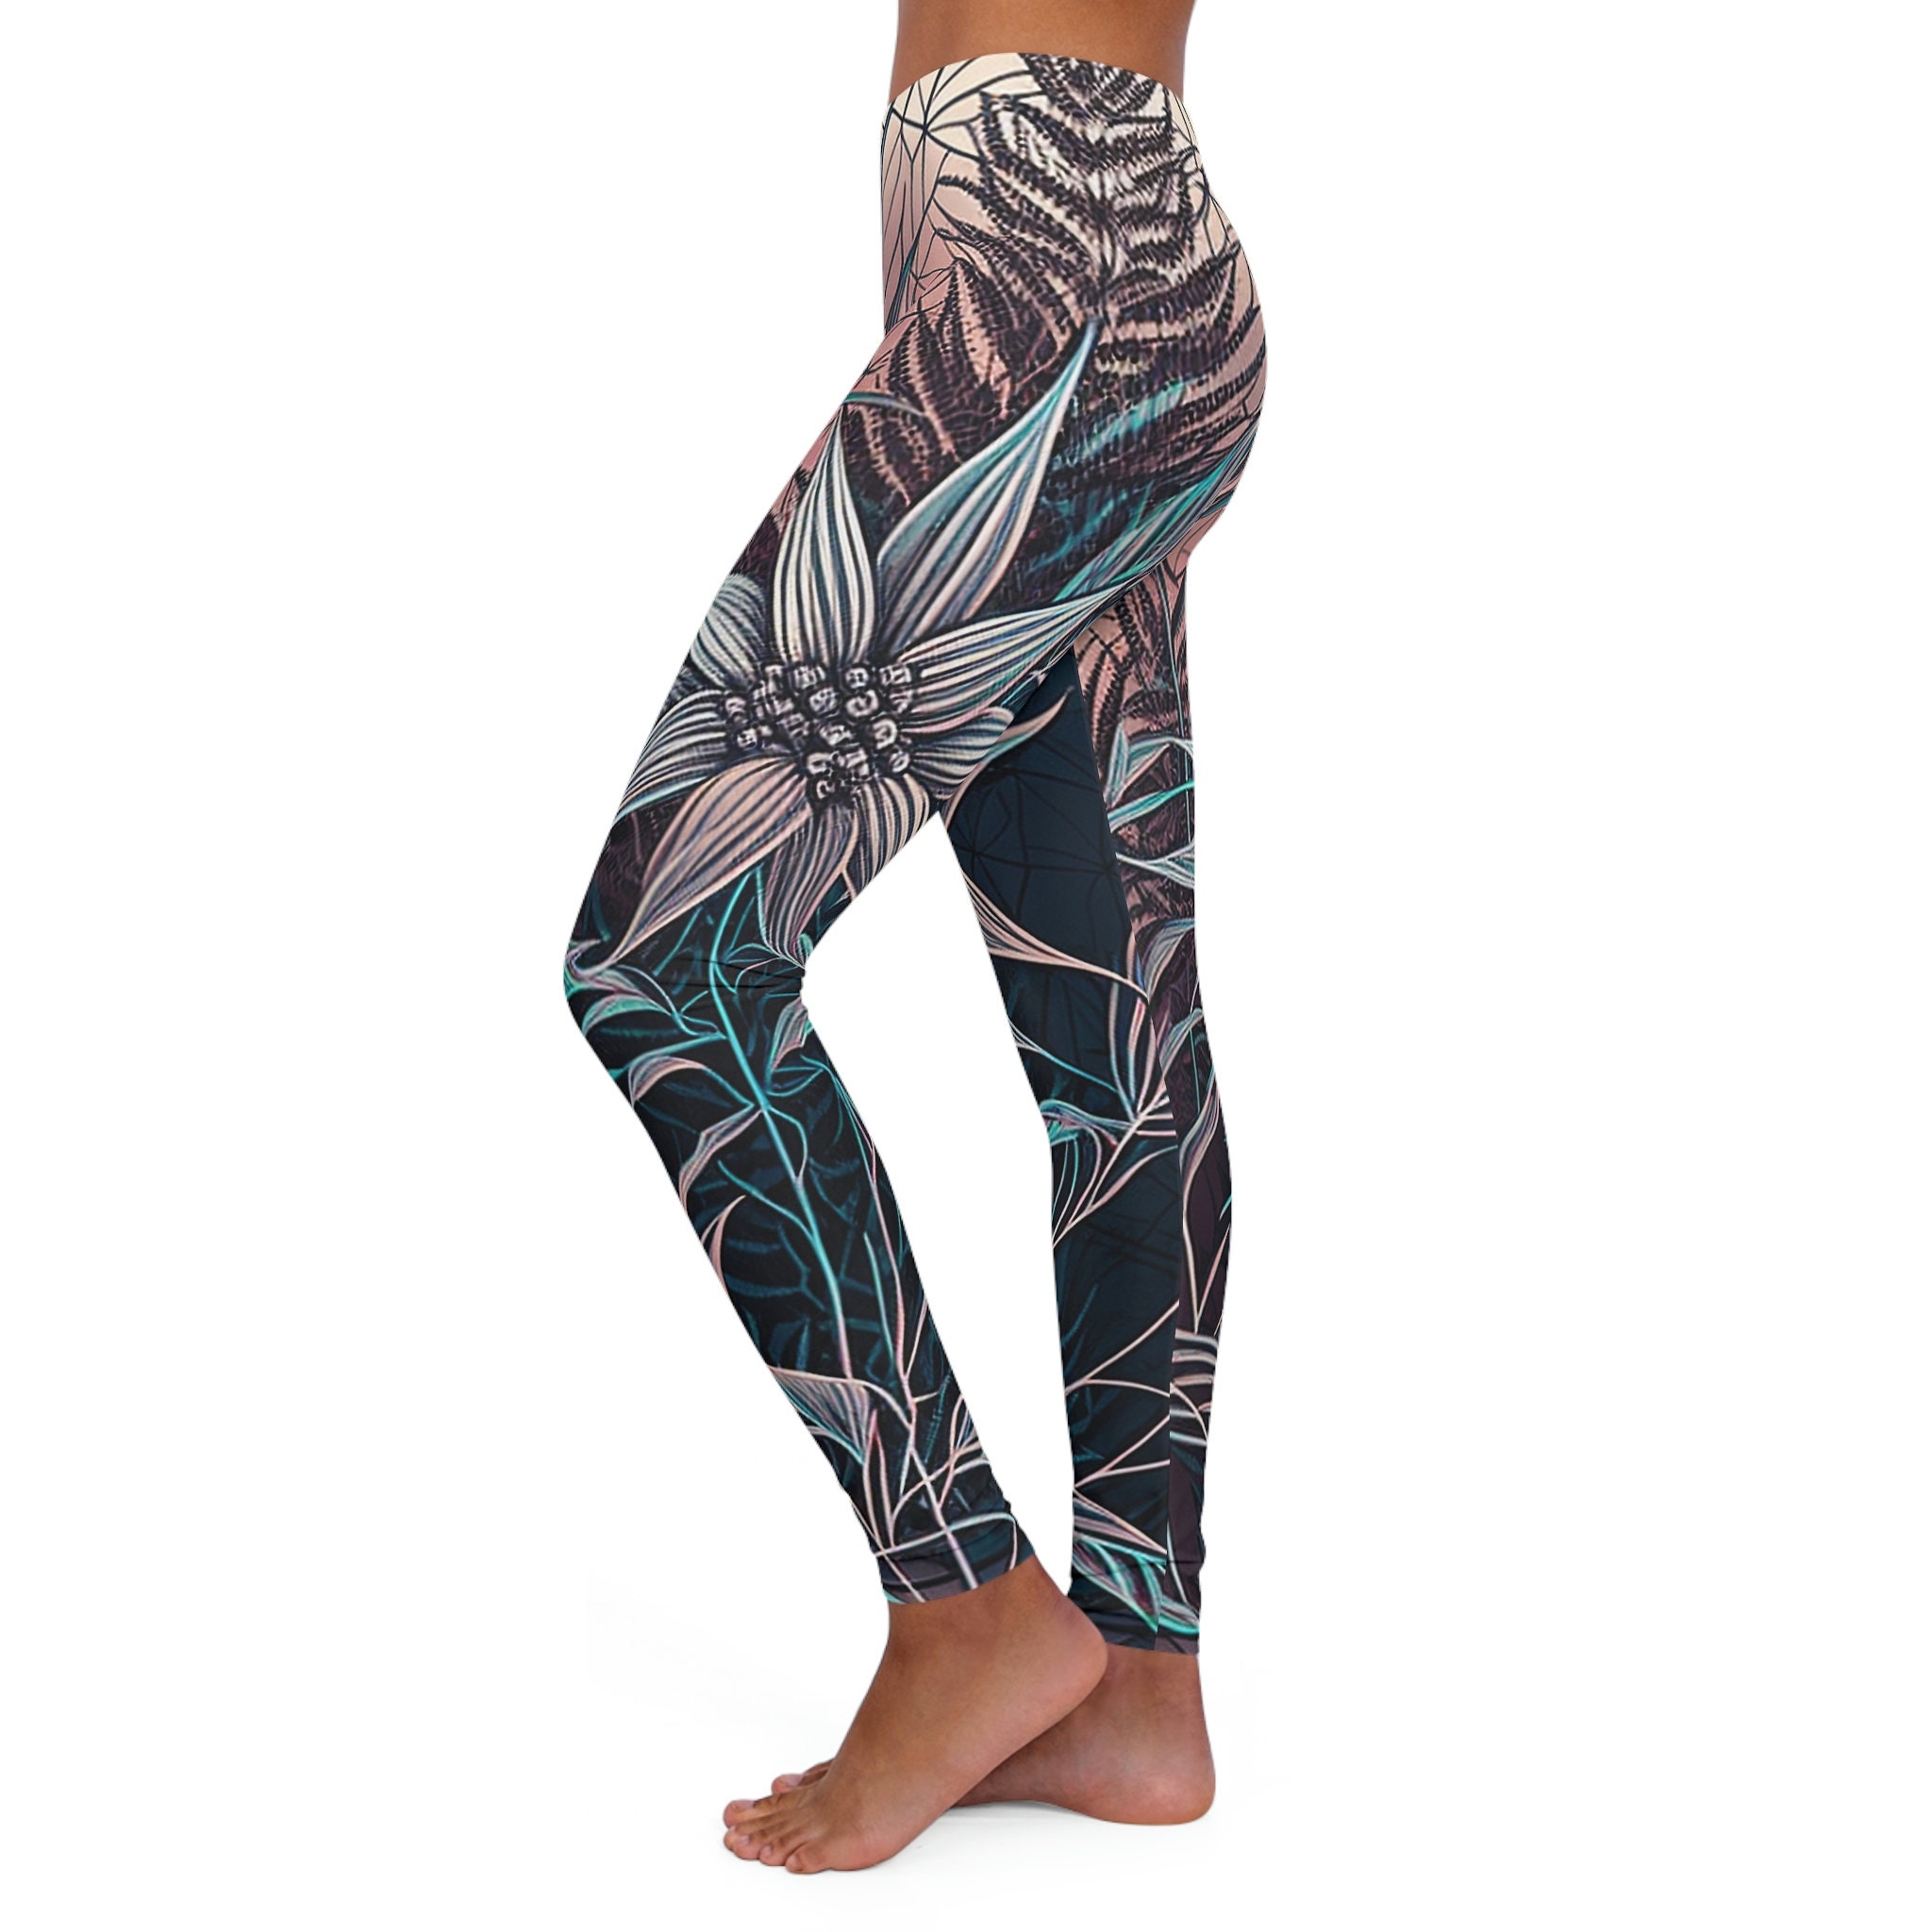 Floral Leggings, Boho Leggings, Yoga Leggings, Nature Leggings sold by  Gary Carr, SKU 42765901